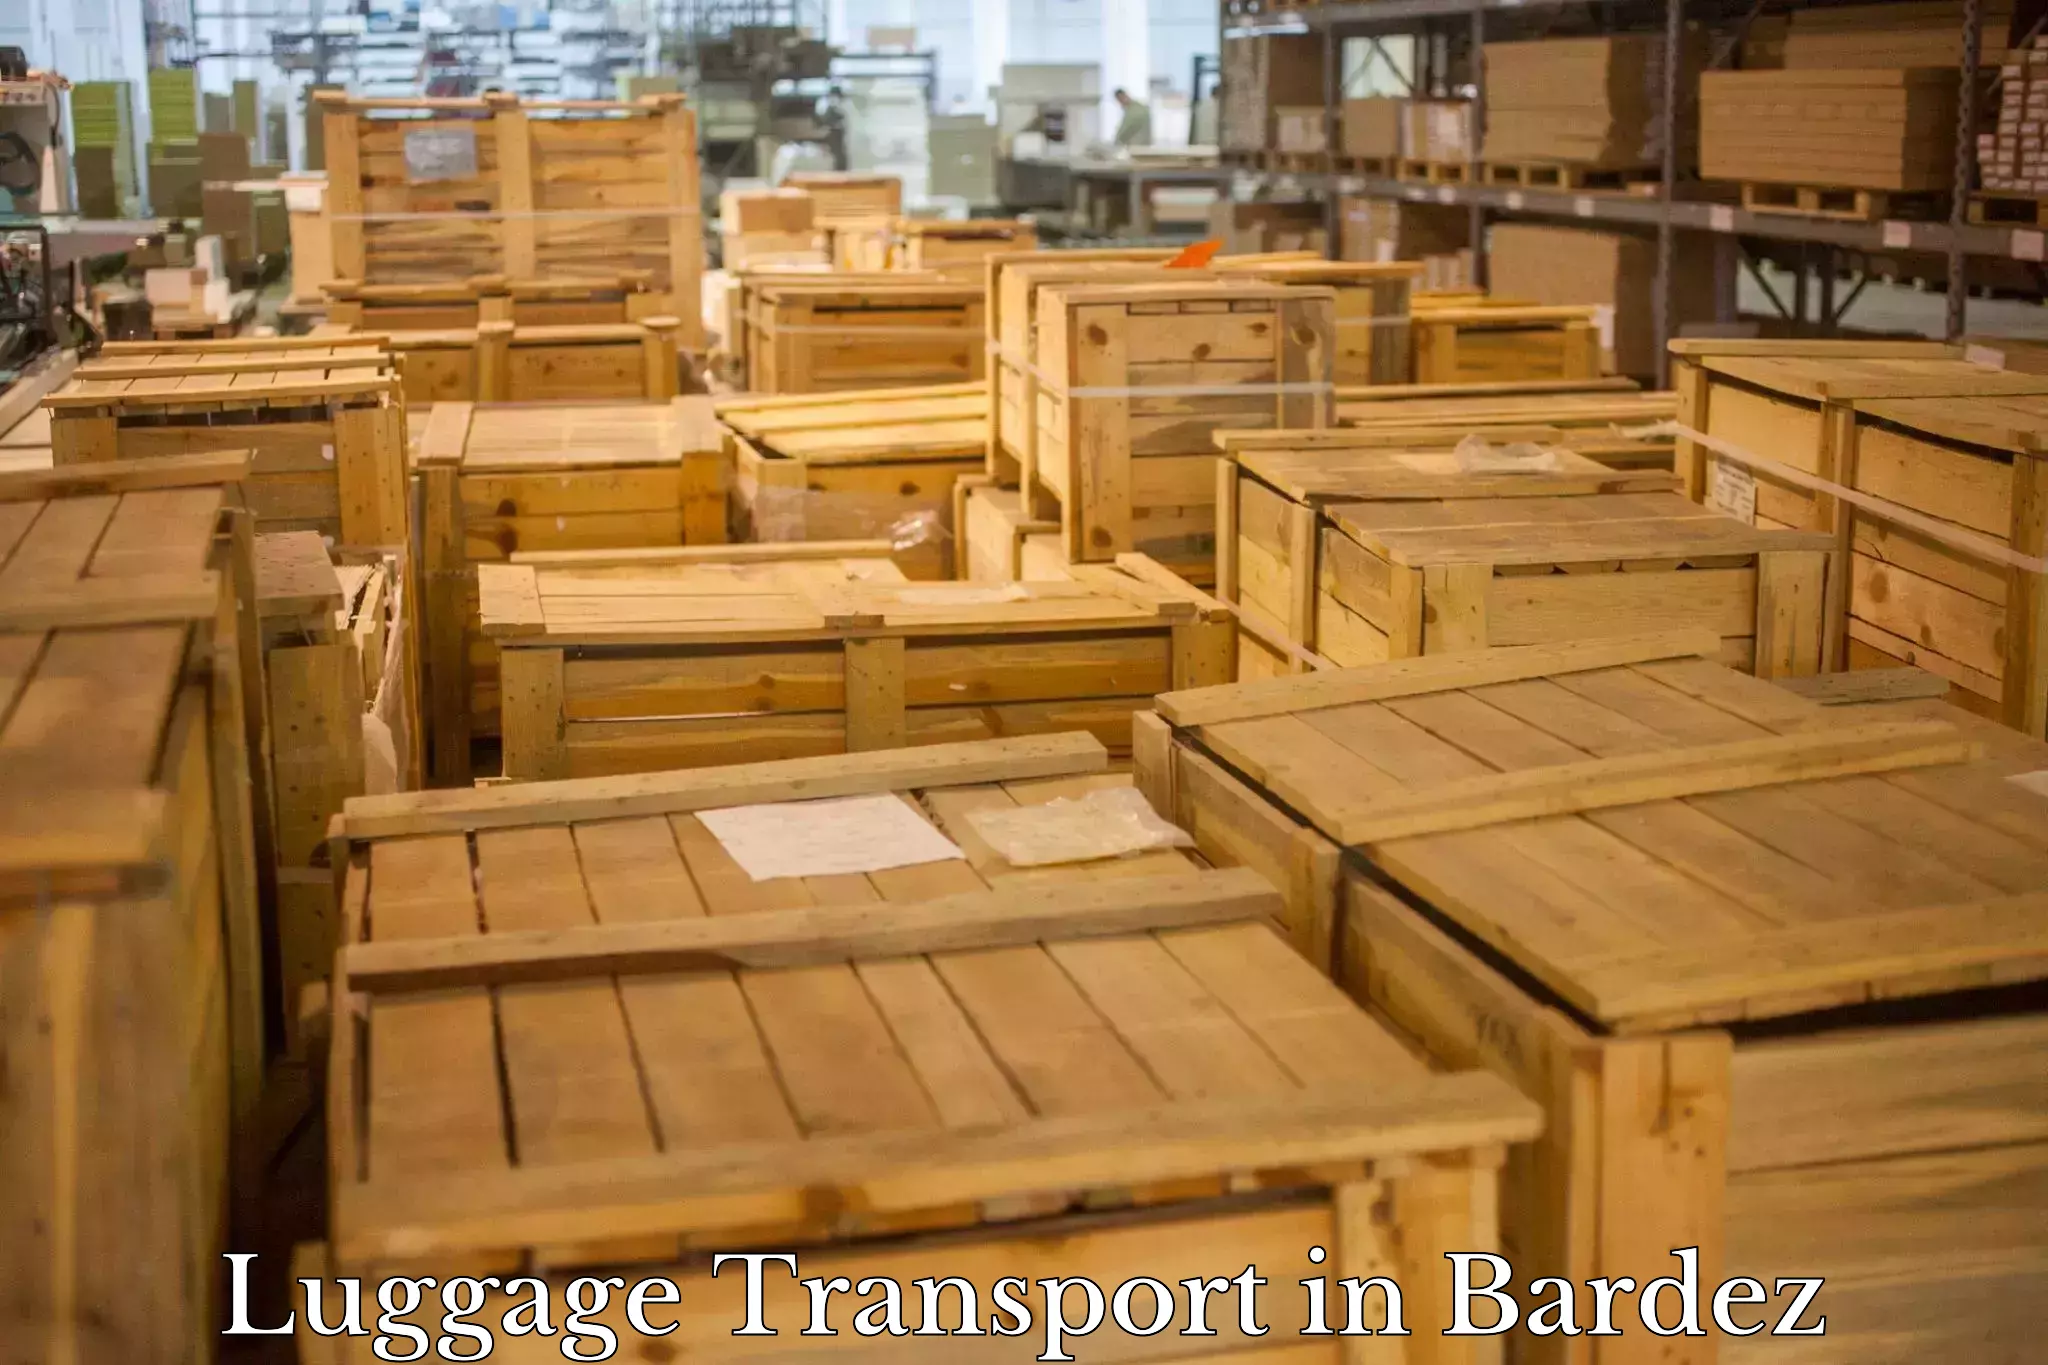 Domestic luggage transport in Bardez